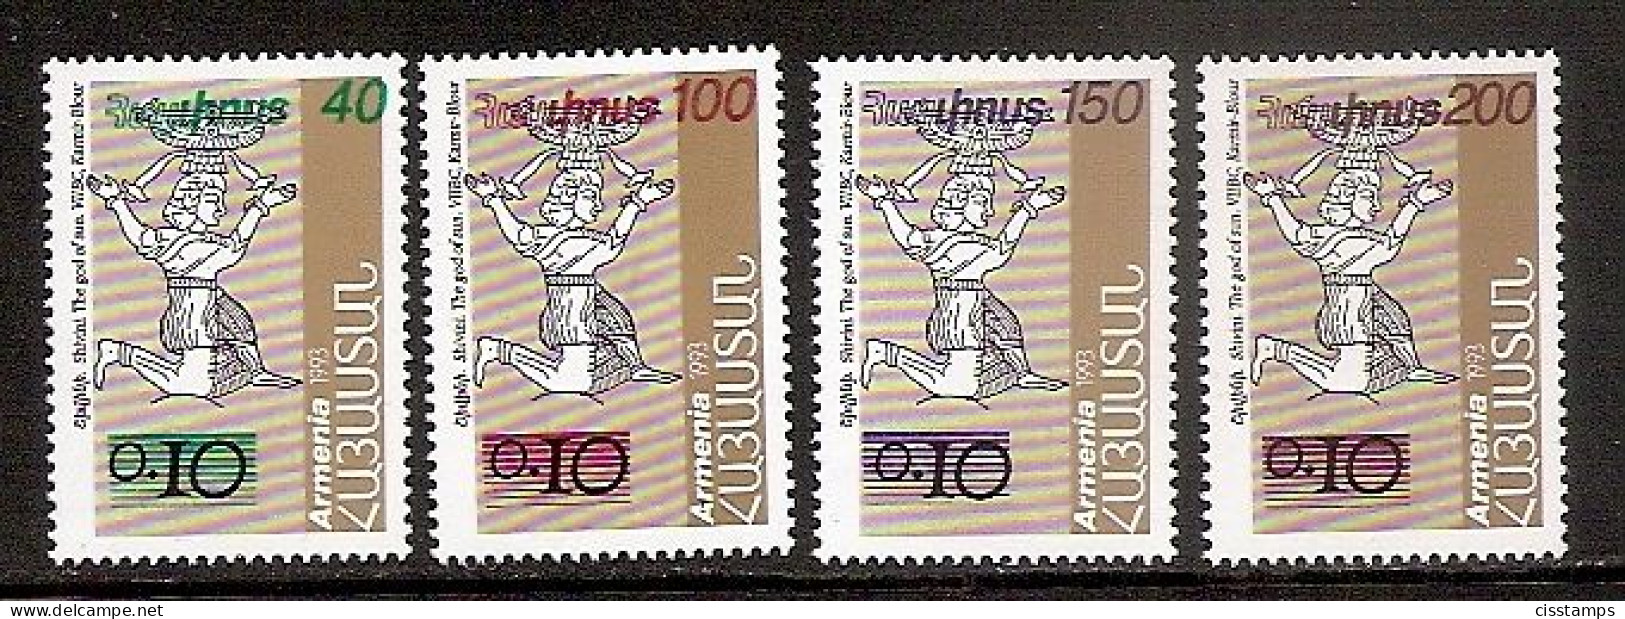 ARMENIA 1996●Definitives Surcharges●Mi276-79 MNH - Armenië